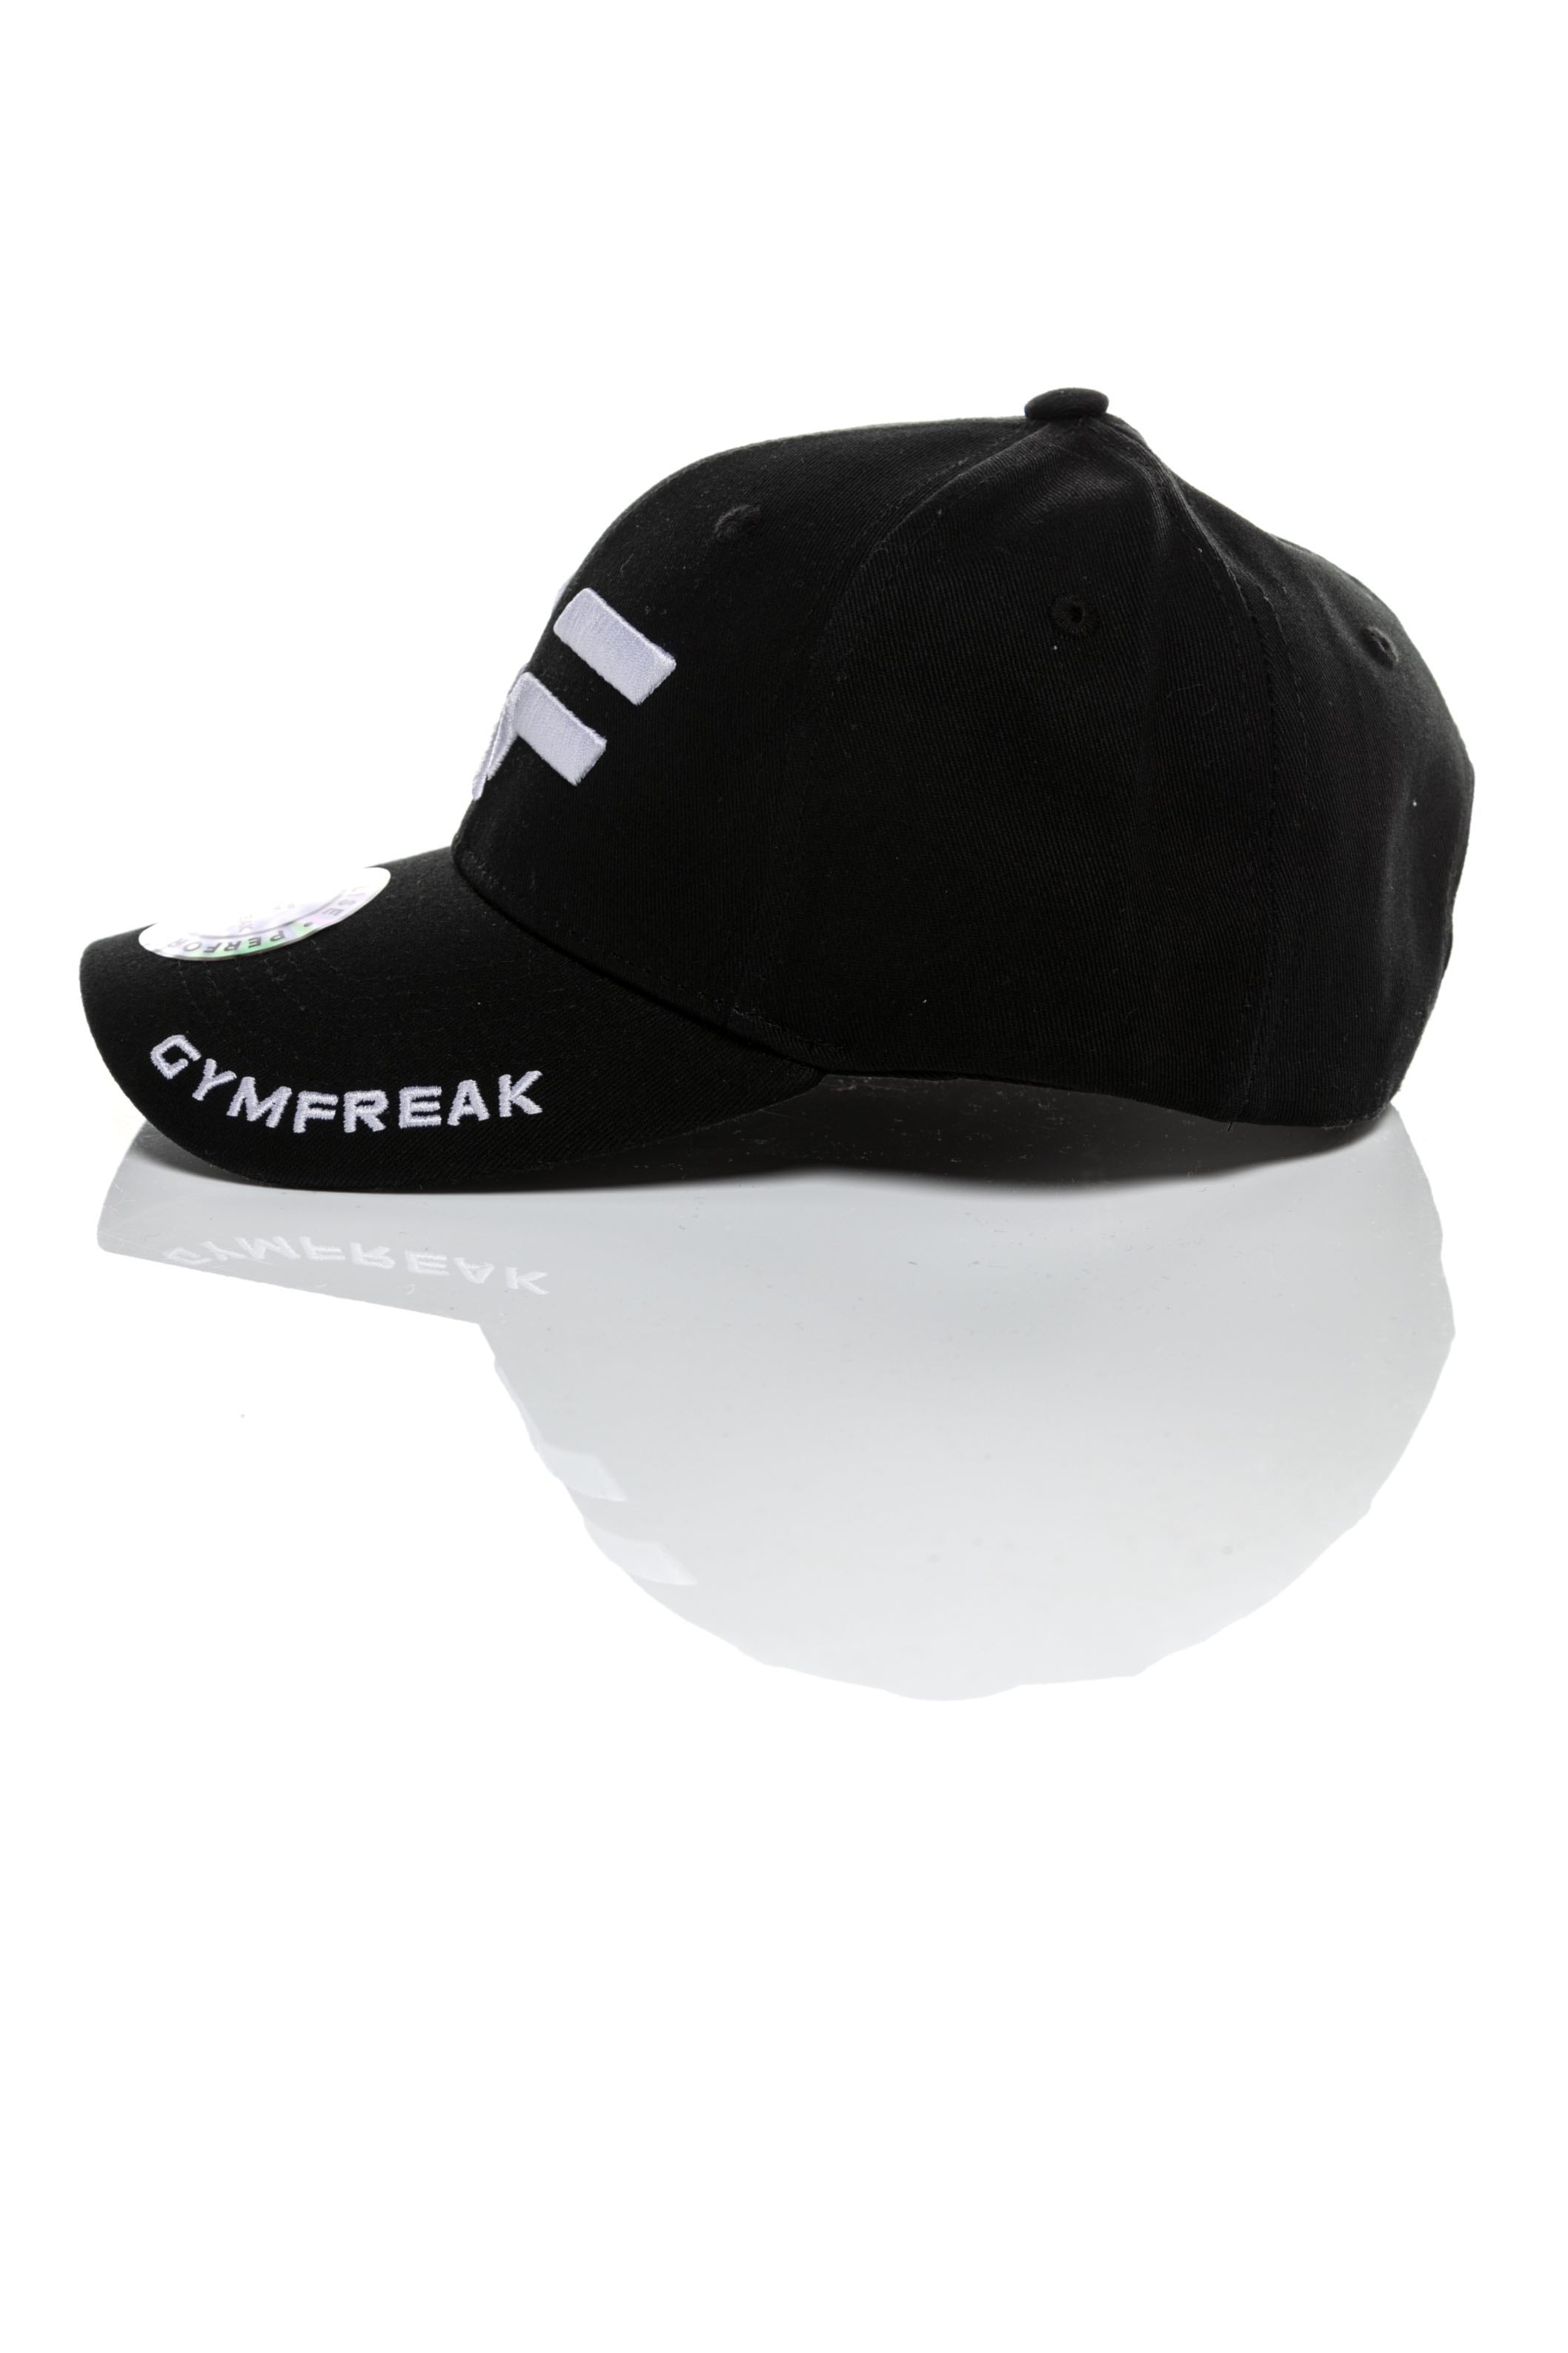 GymFreak Pro Cap - Black